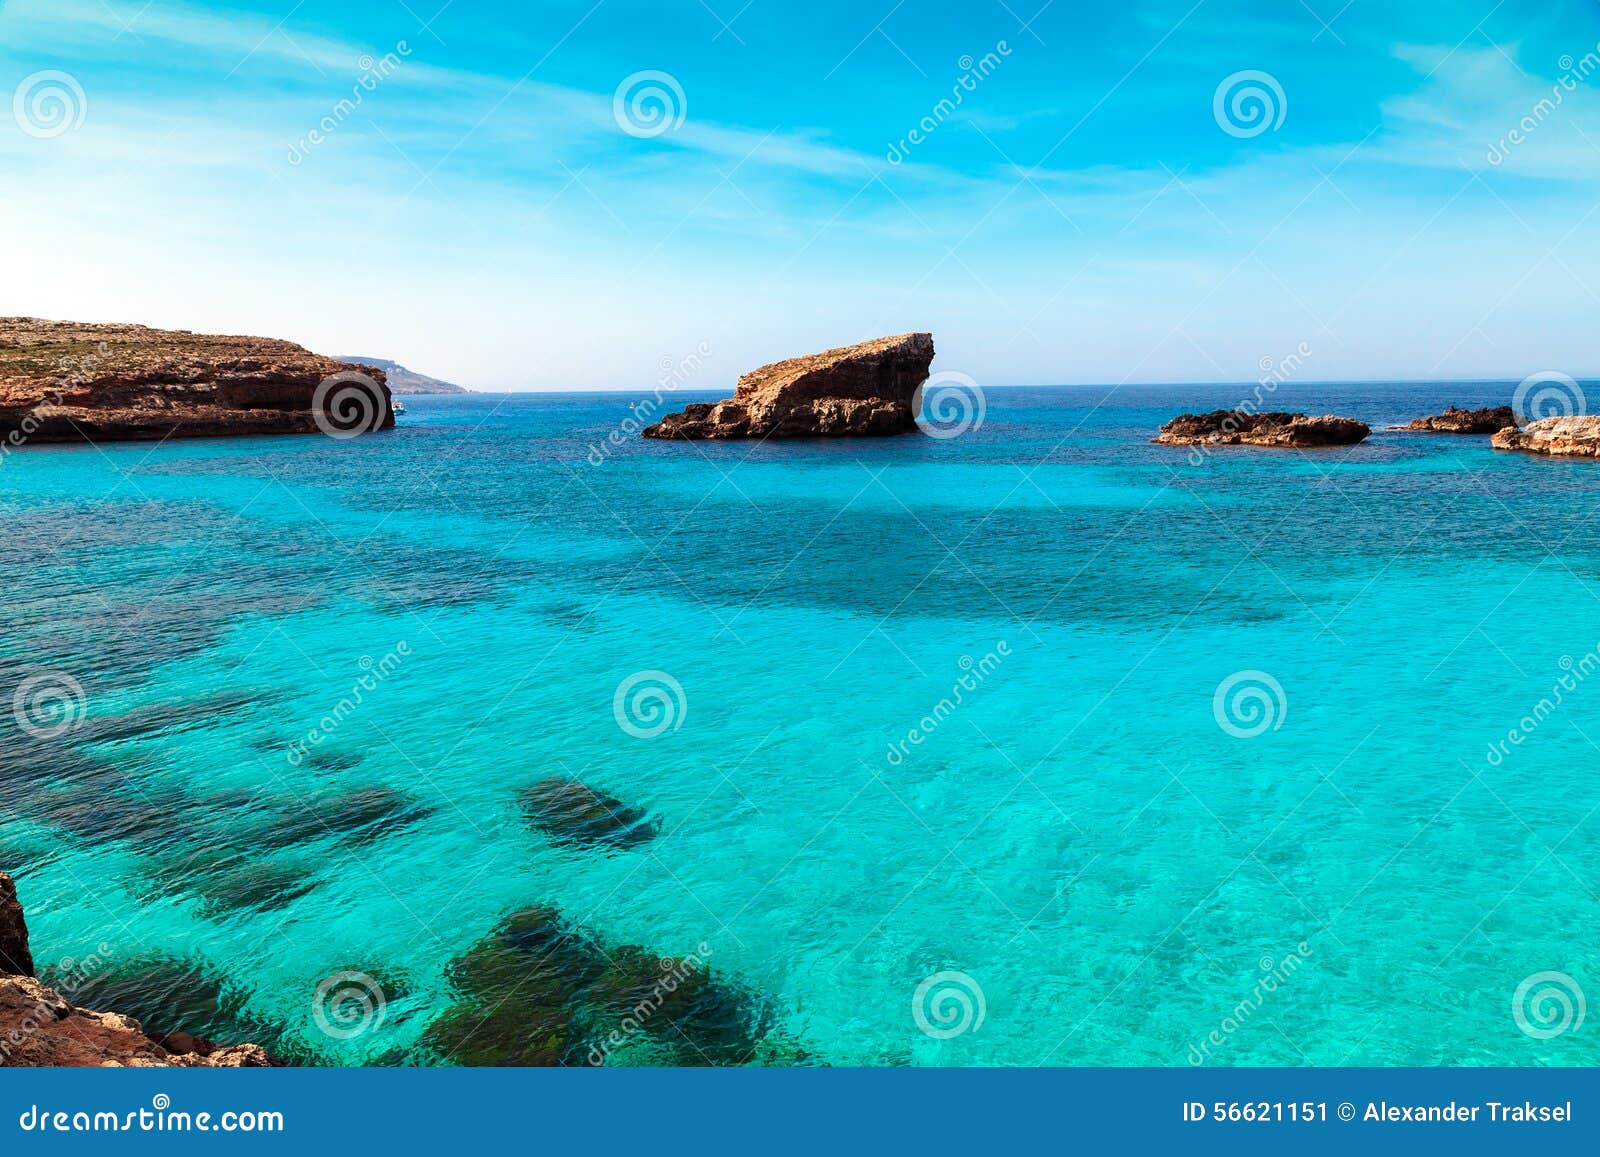 the blue lagoon on comino island, malta gozov